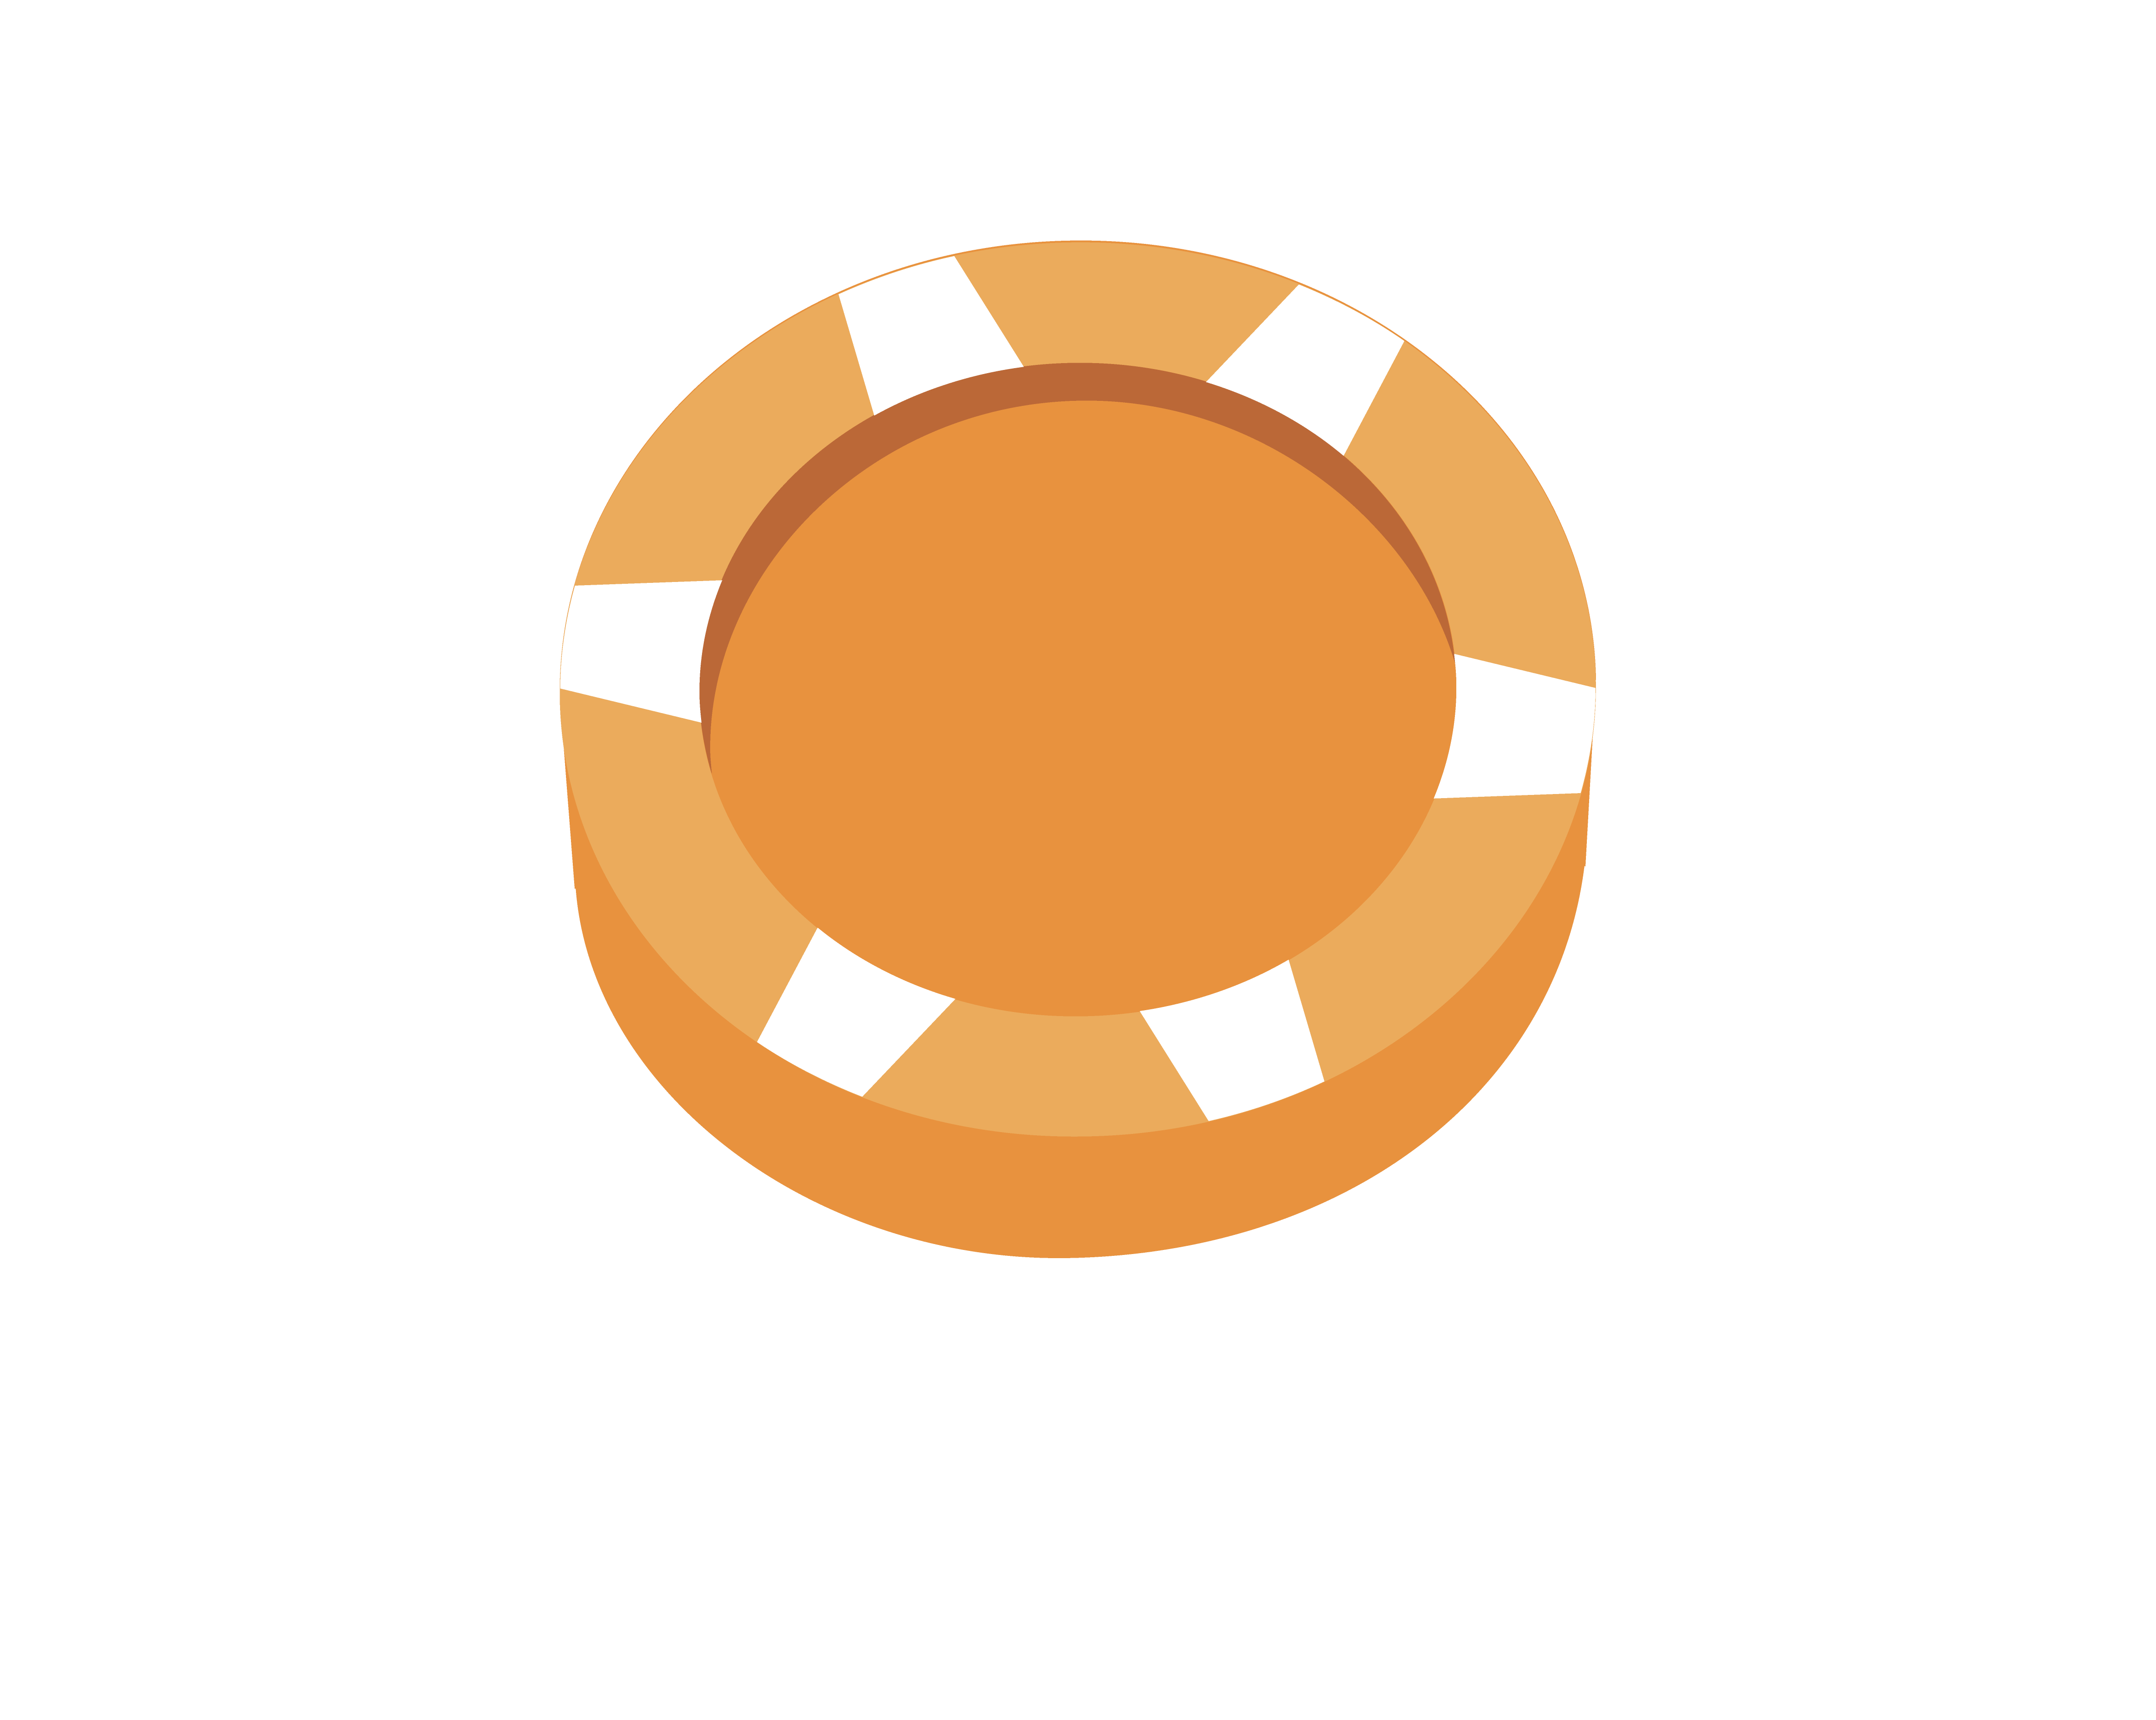 orange poker chip